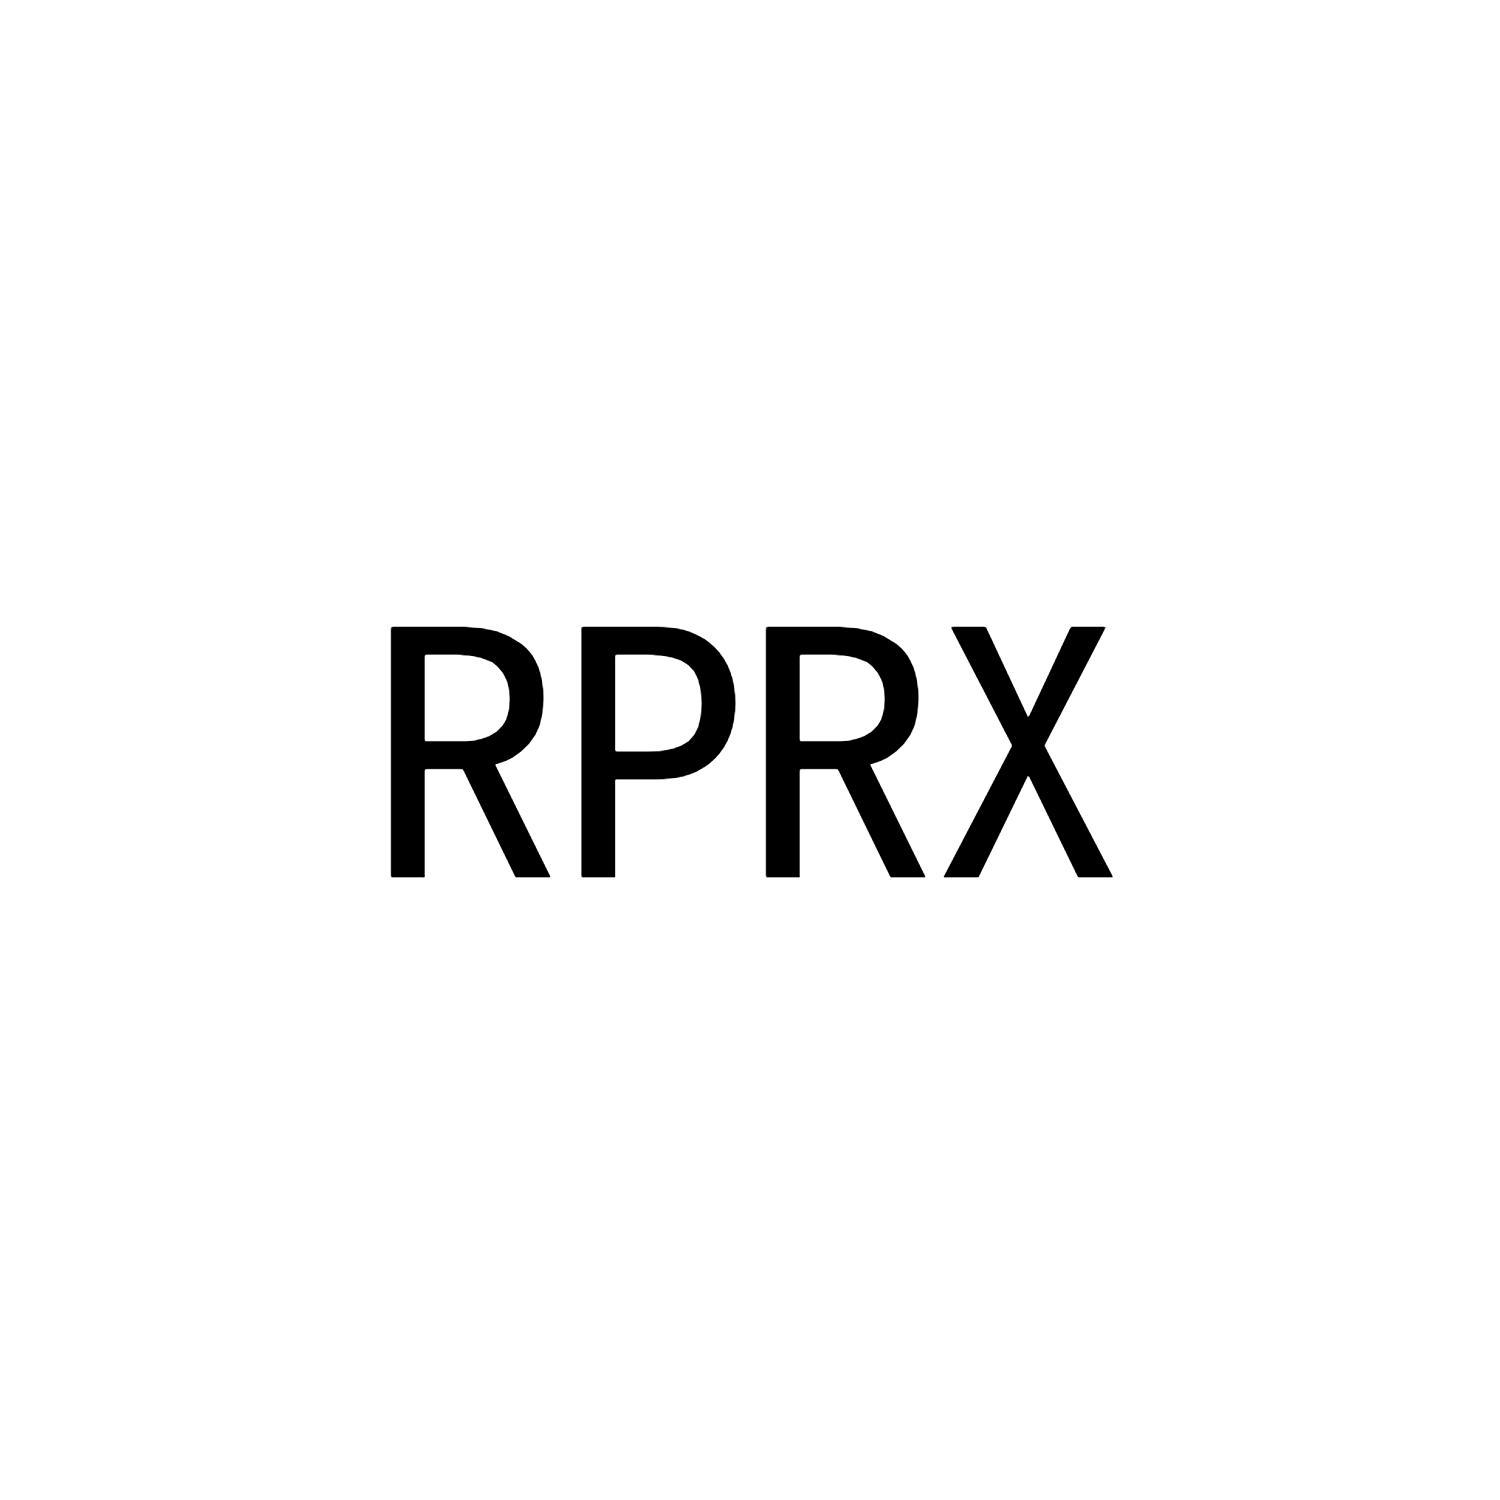 RPRX